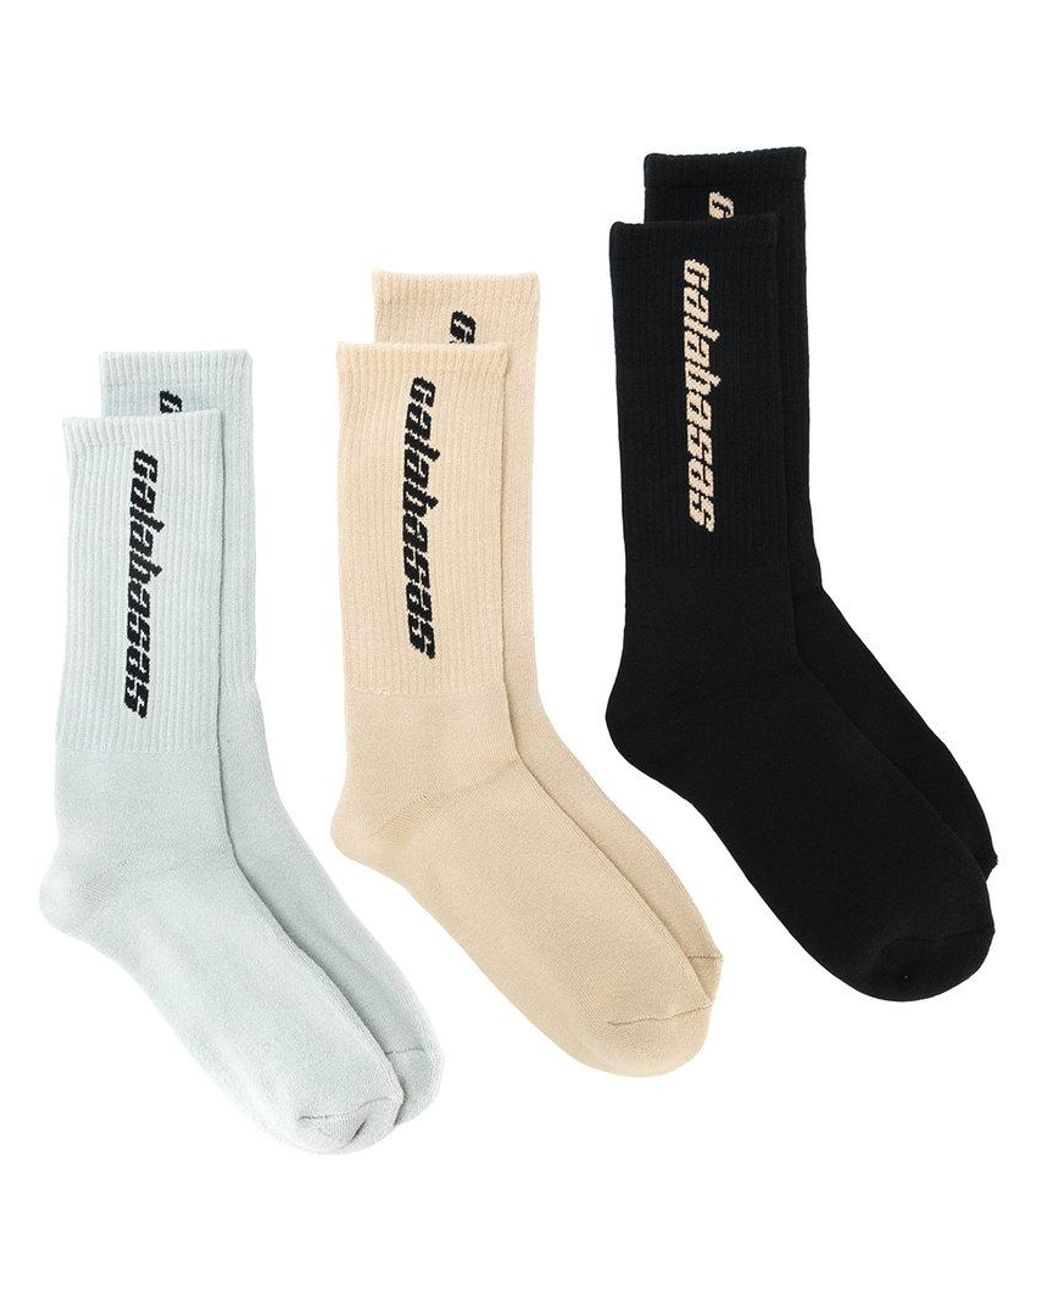 Yeezy Calabasas Socks Set for Men | Lyst Canada